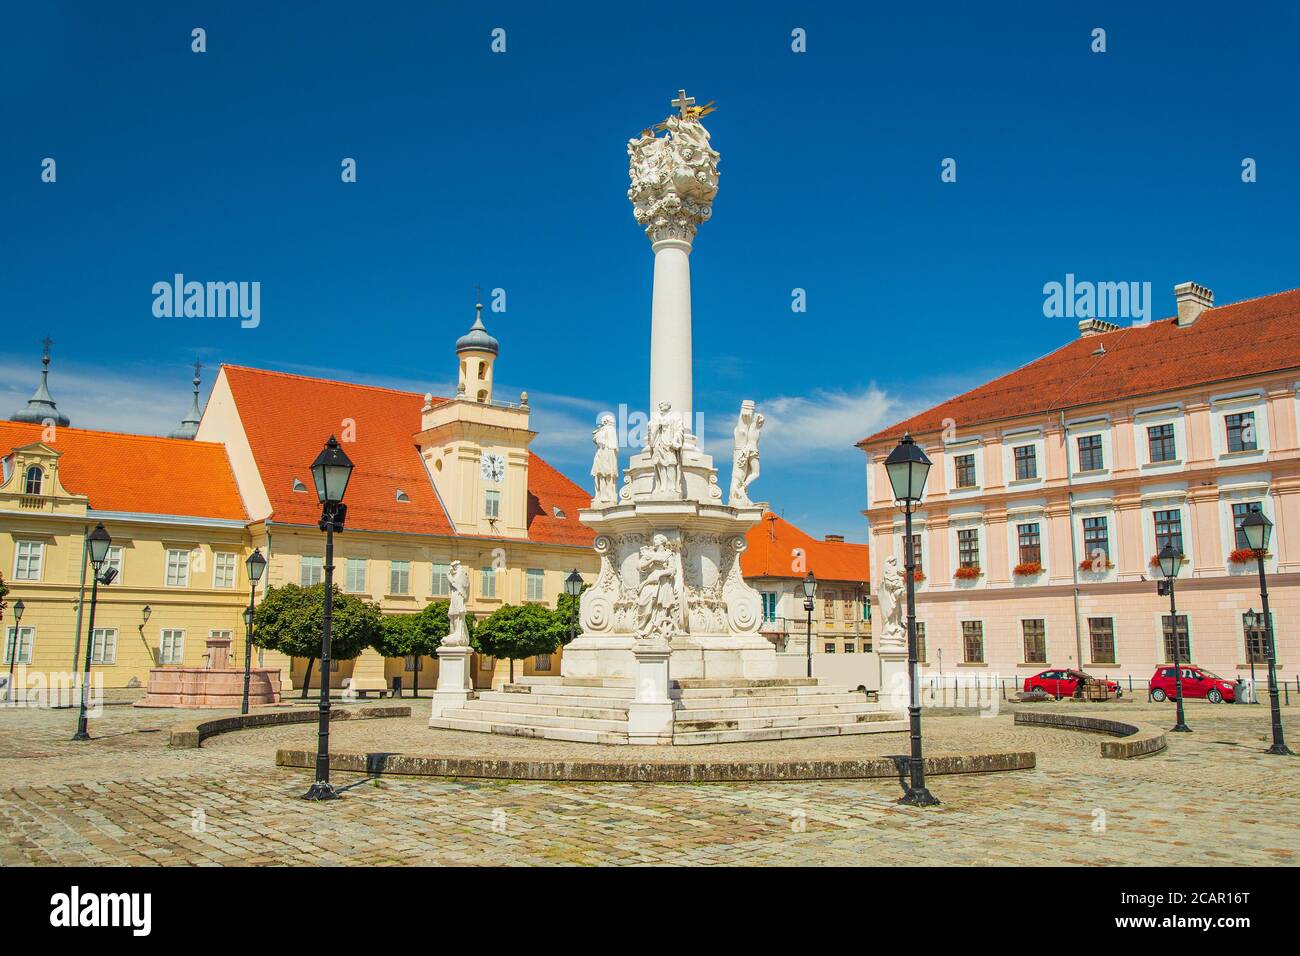 Holy trinity square in Tvrdja, old historic town of Osijek, Croatia Stock Photo